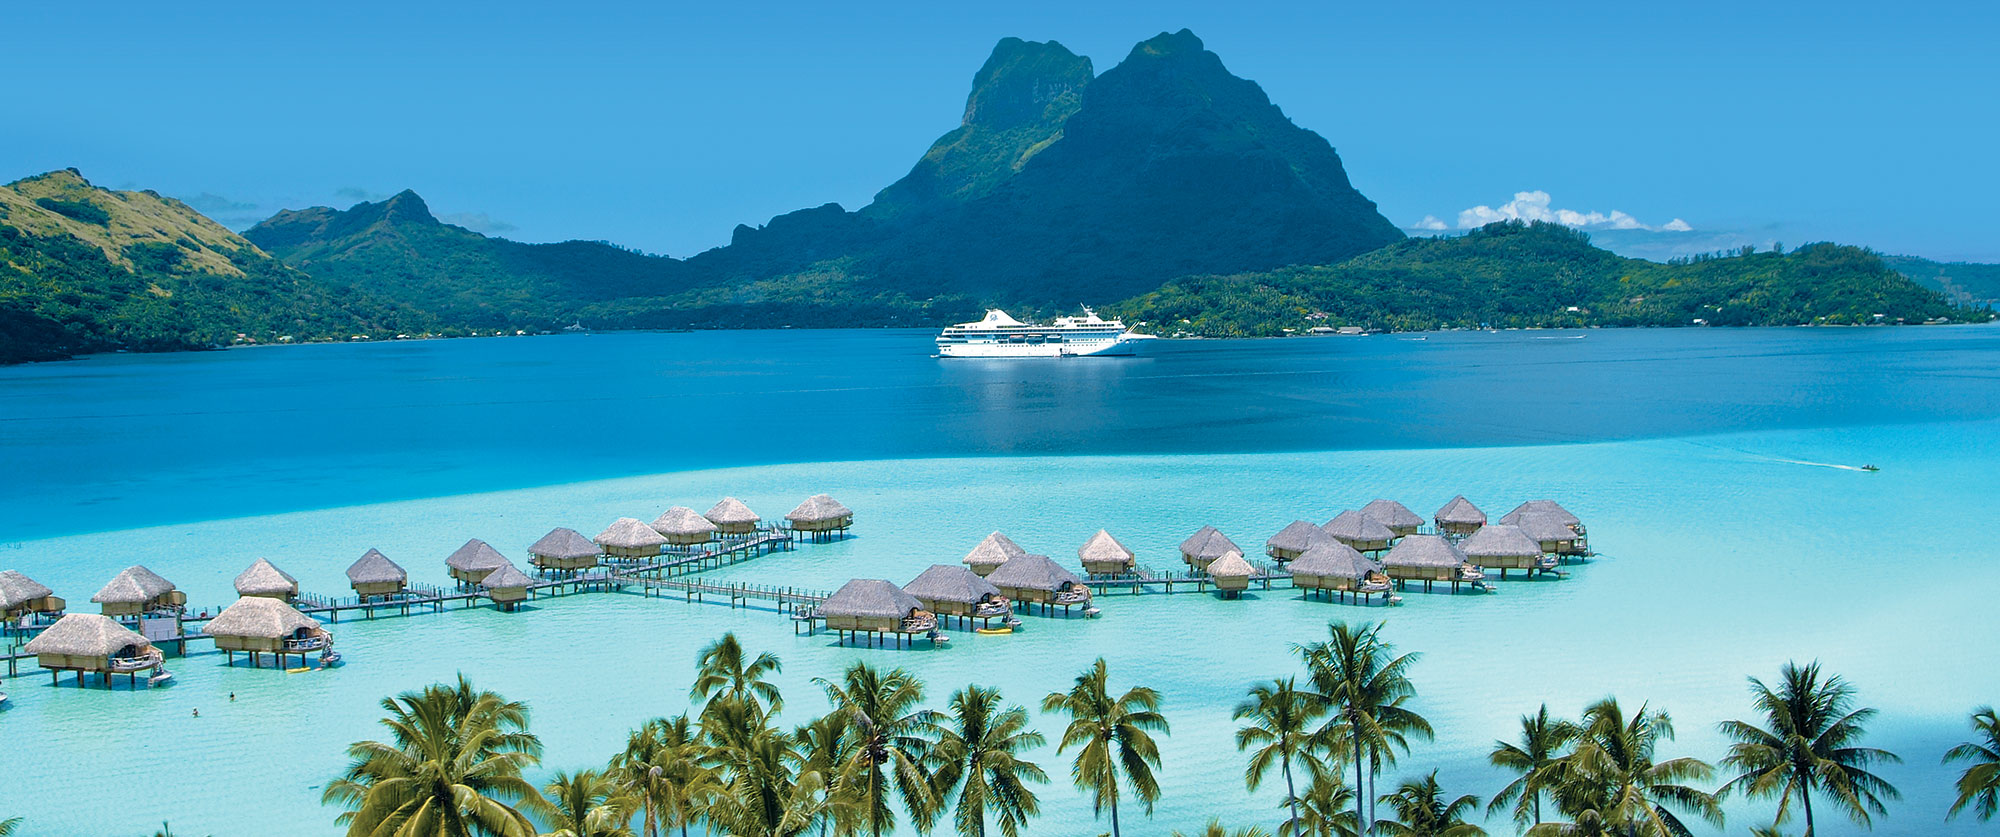 Bora Bora Cruise - Luxury Cruise Vacation of Bora Bora and Tahiti